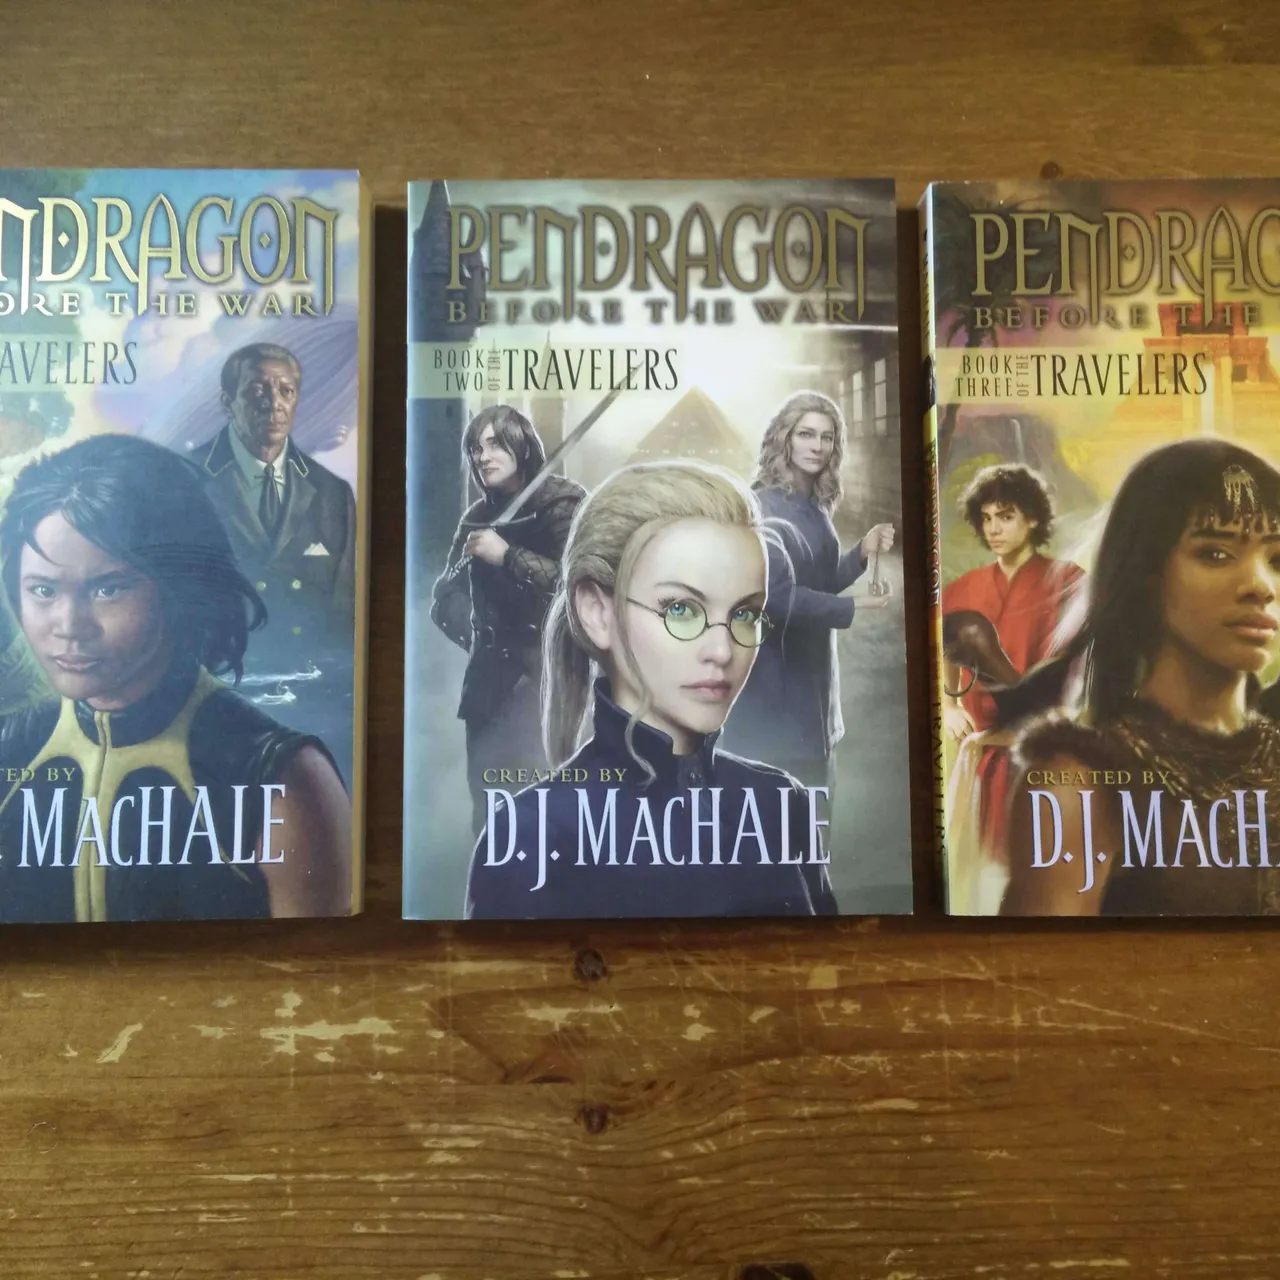 Pendragon Books 1-3 by D.J. Machale photo 1